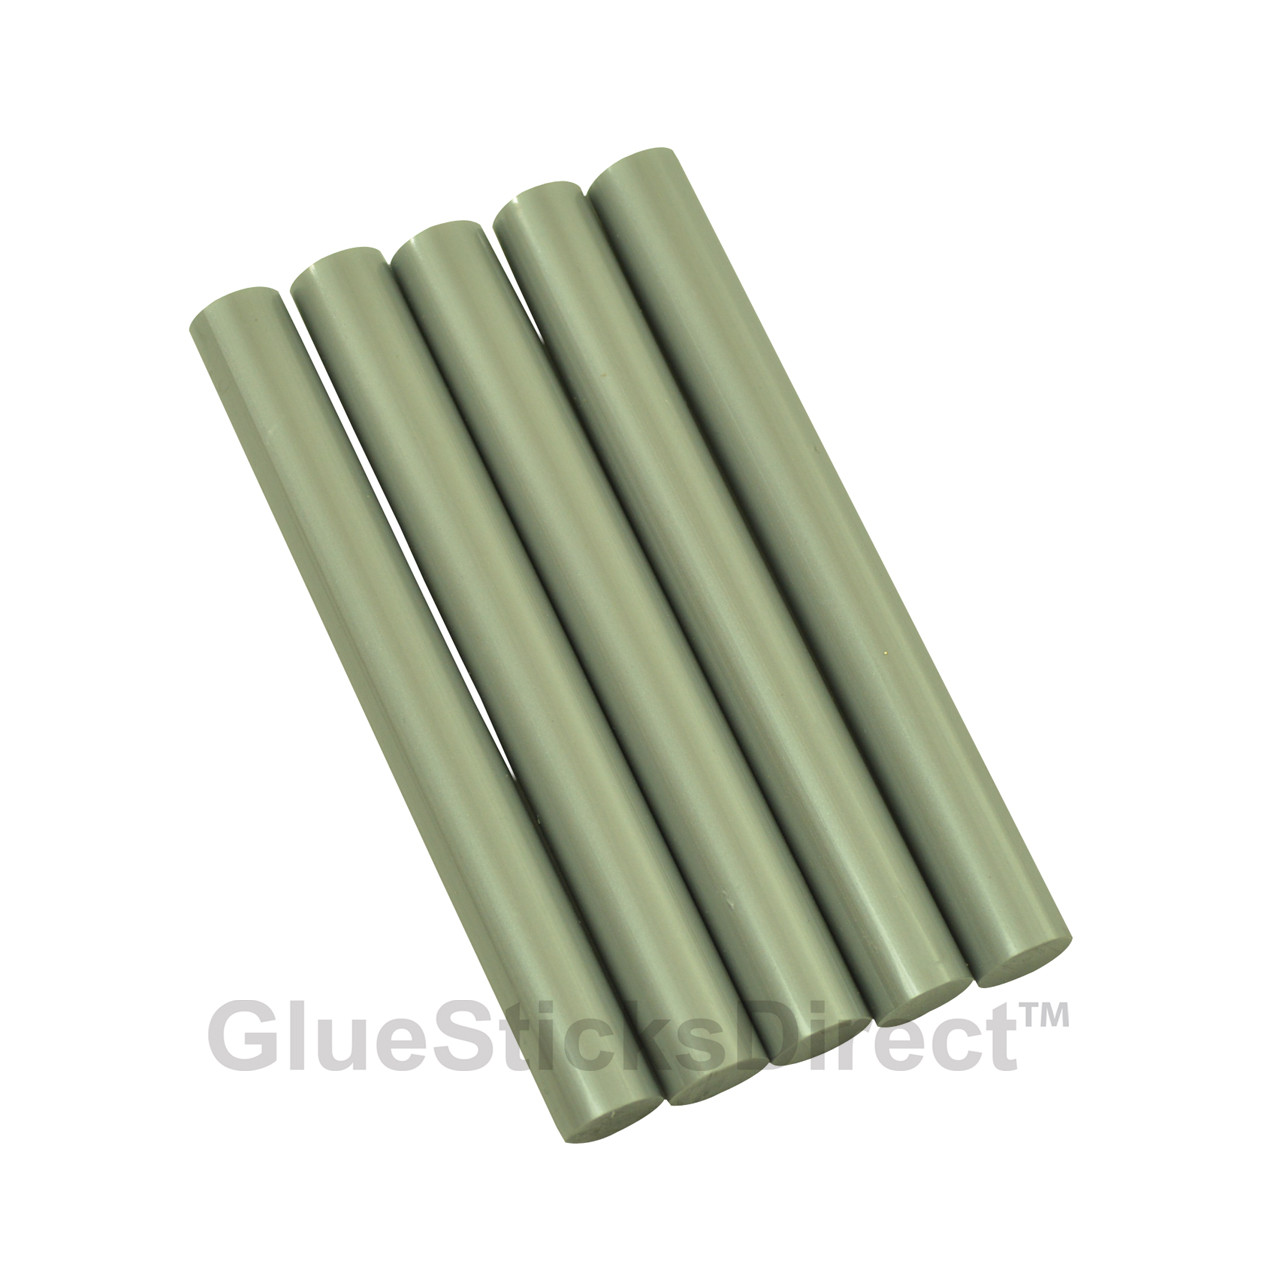 GlueSticksDirect Silver Metallic Glue Sticks 7/16" X 4" 5 lbs